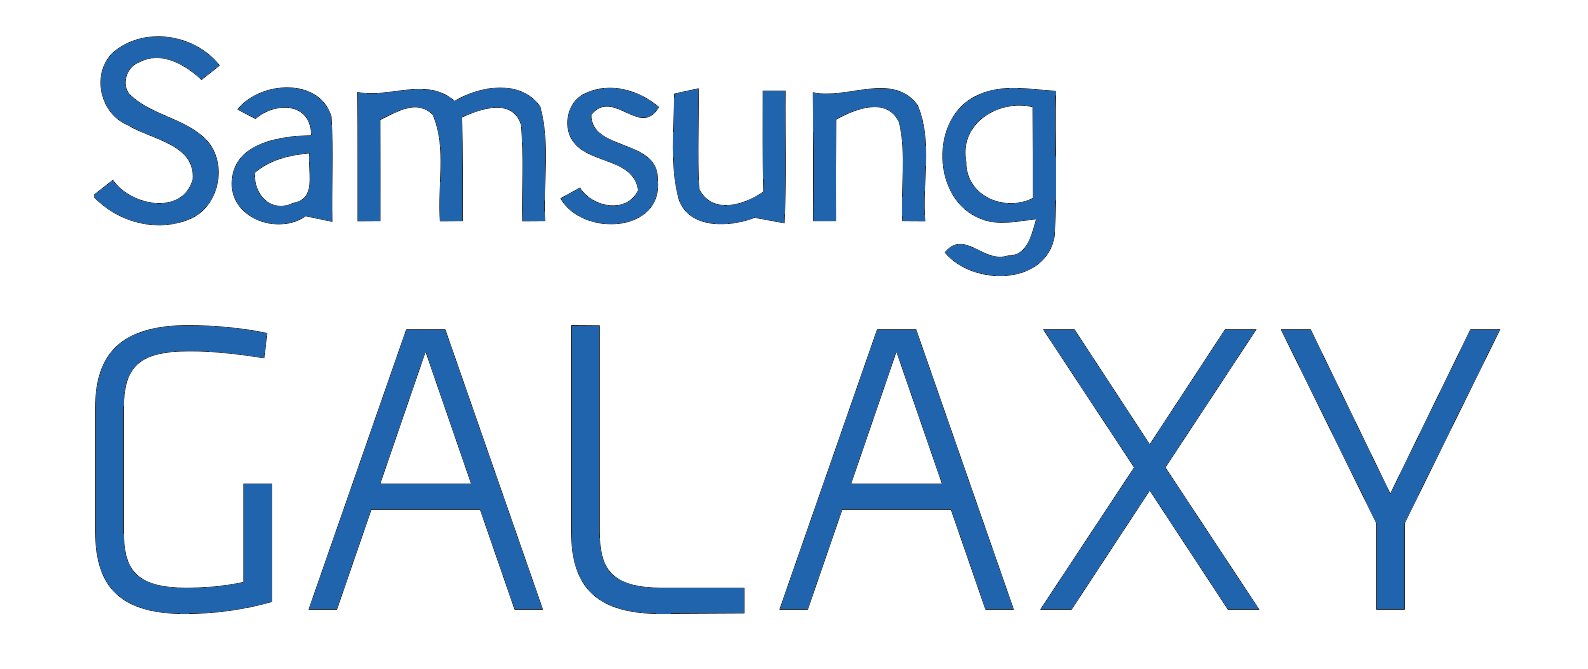 Blue Samsung Galaxy Logo - Samsung_Galaxy - iPhone Repair Ipswich Serving East Anglia - 01473 ...